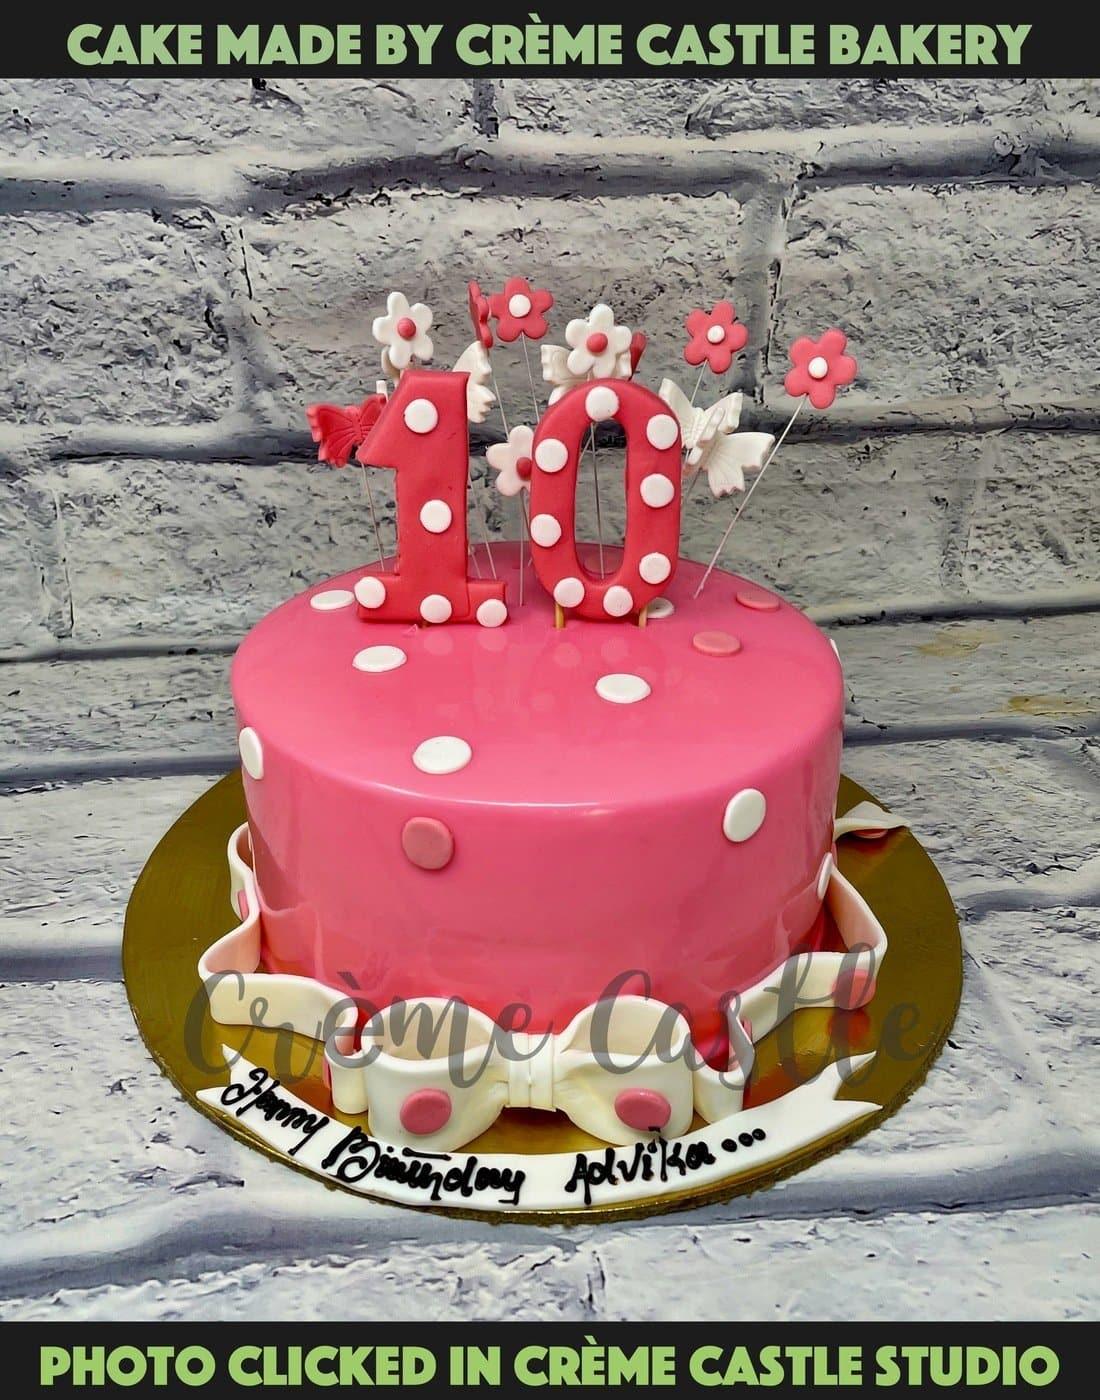 Friendship Theme Cake | Birthday Cake Design For Best Friend | Doll cake |  Kitchen With Shama - YouTube